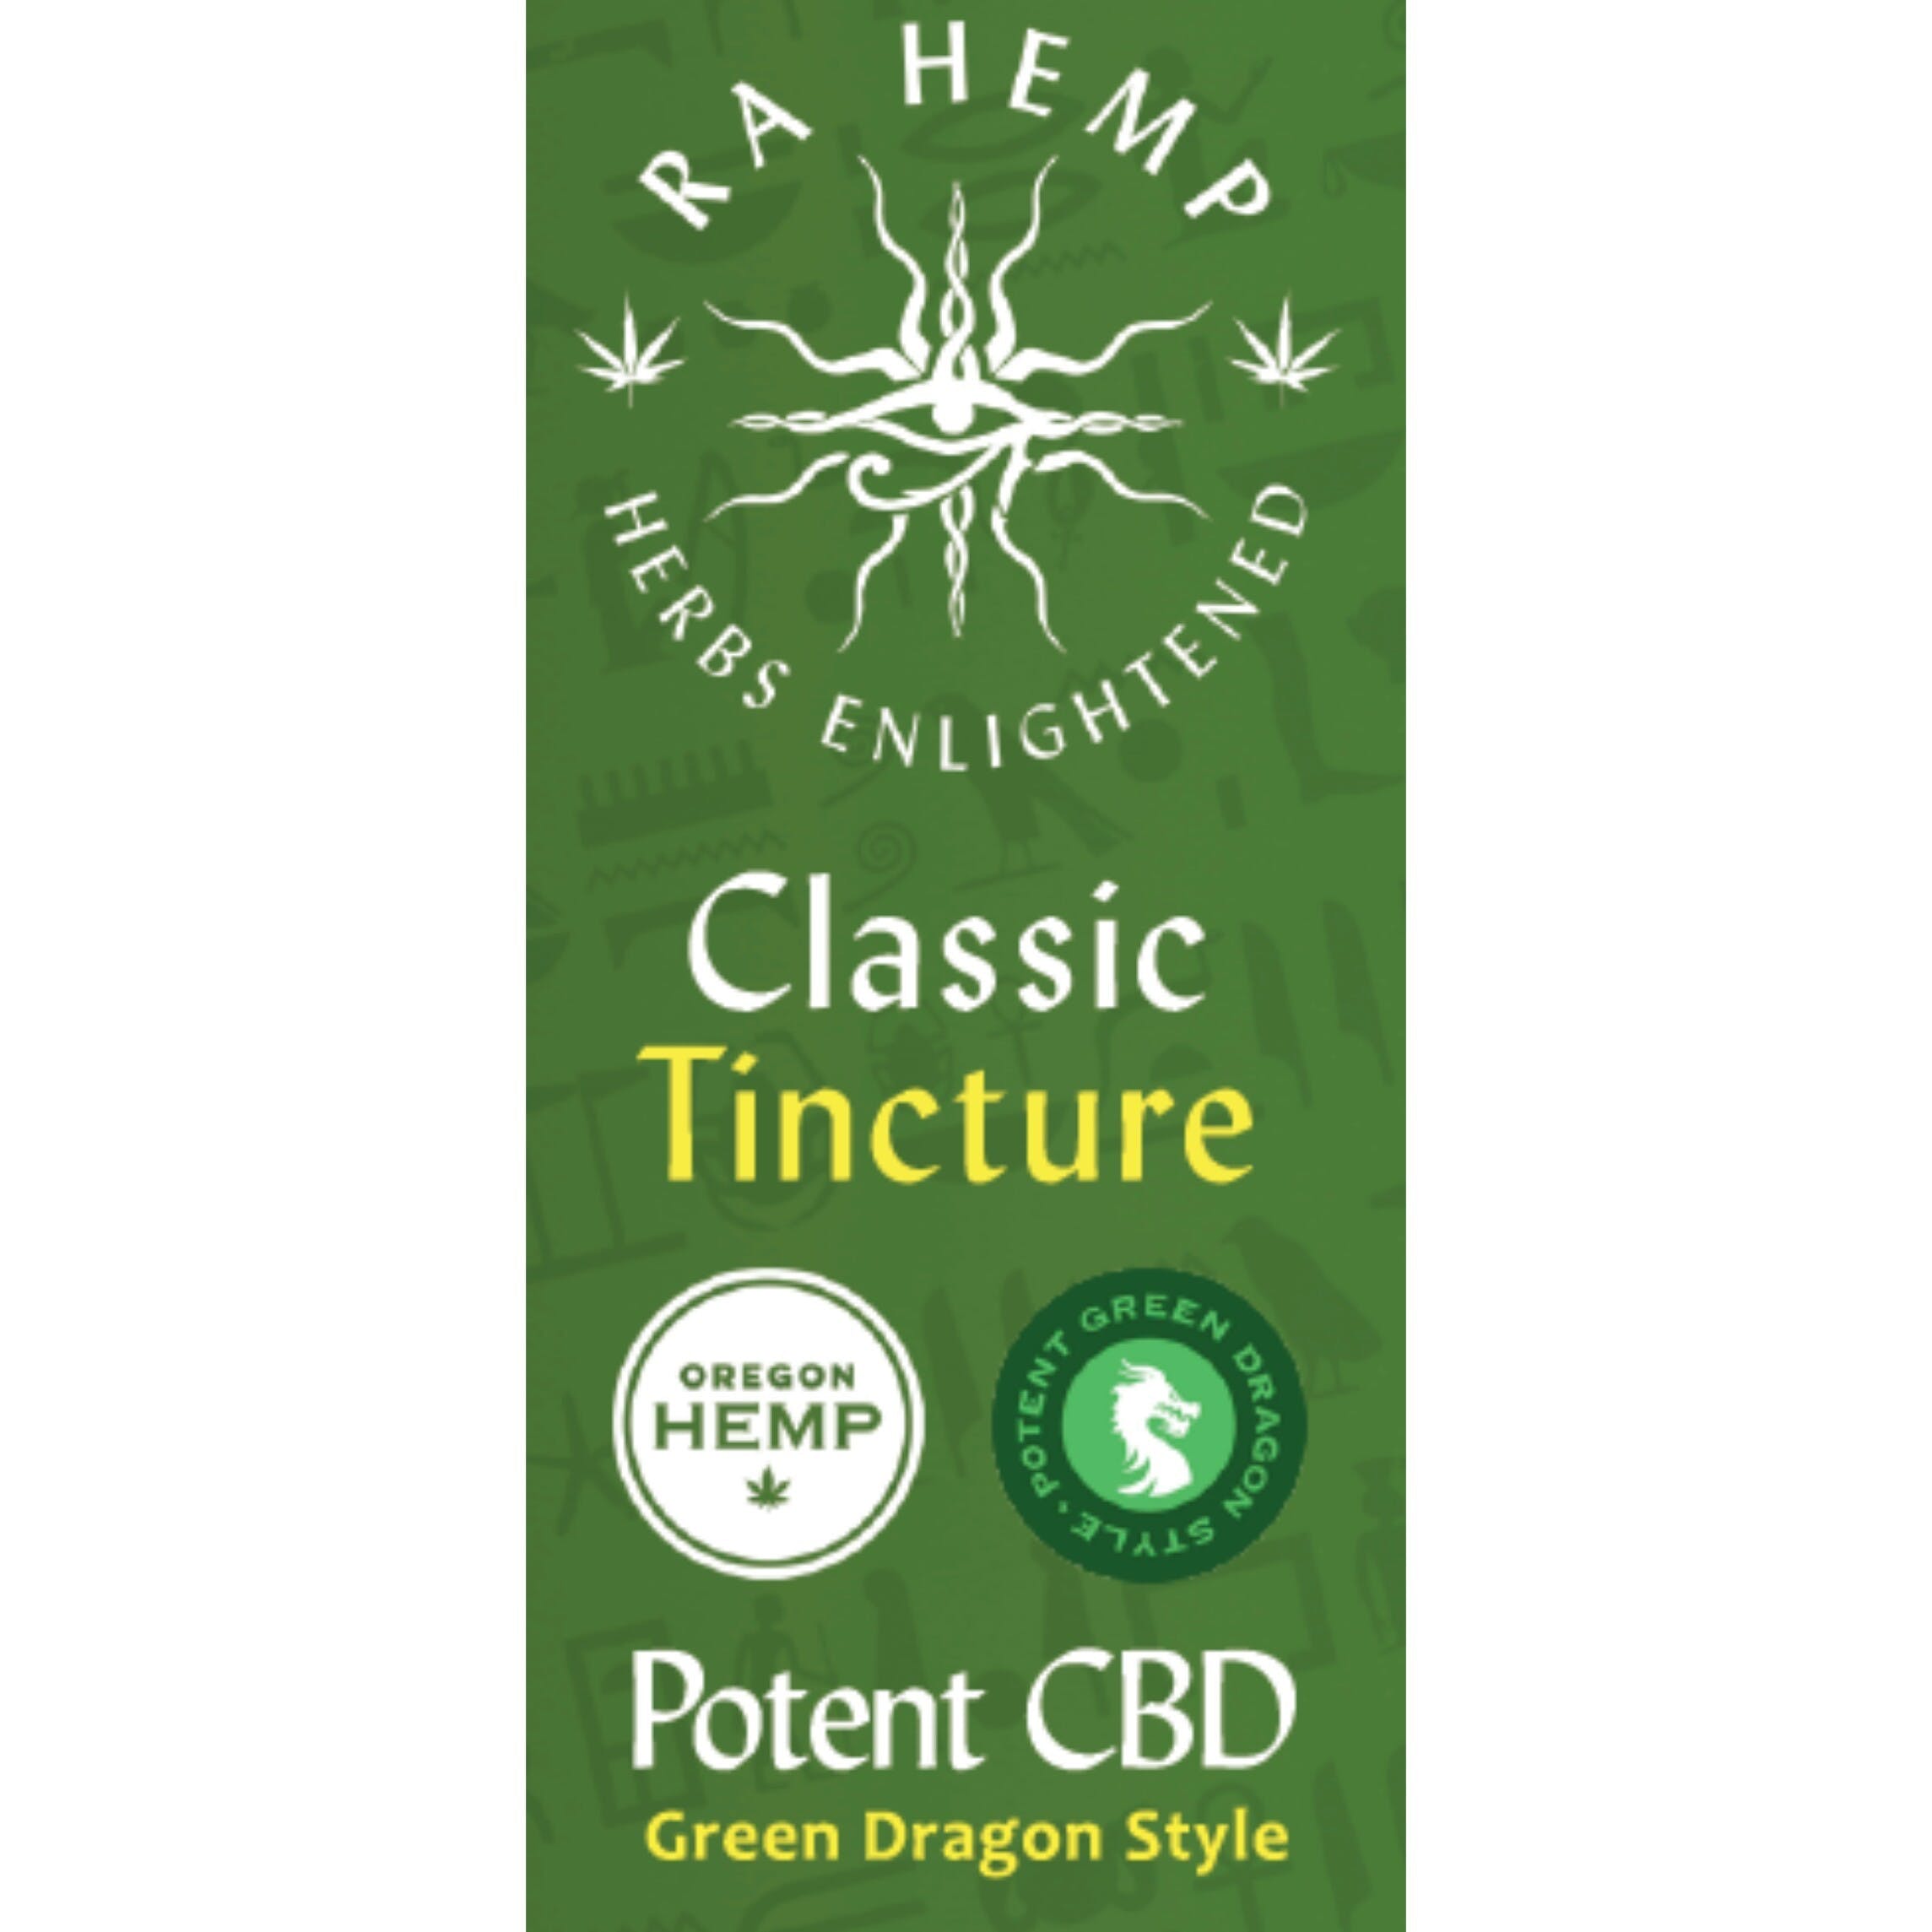 tincture-sun-god-medicinals-ra-hemp-classic-green-dragon-cbd-tincture